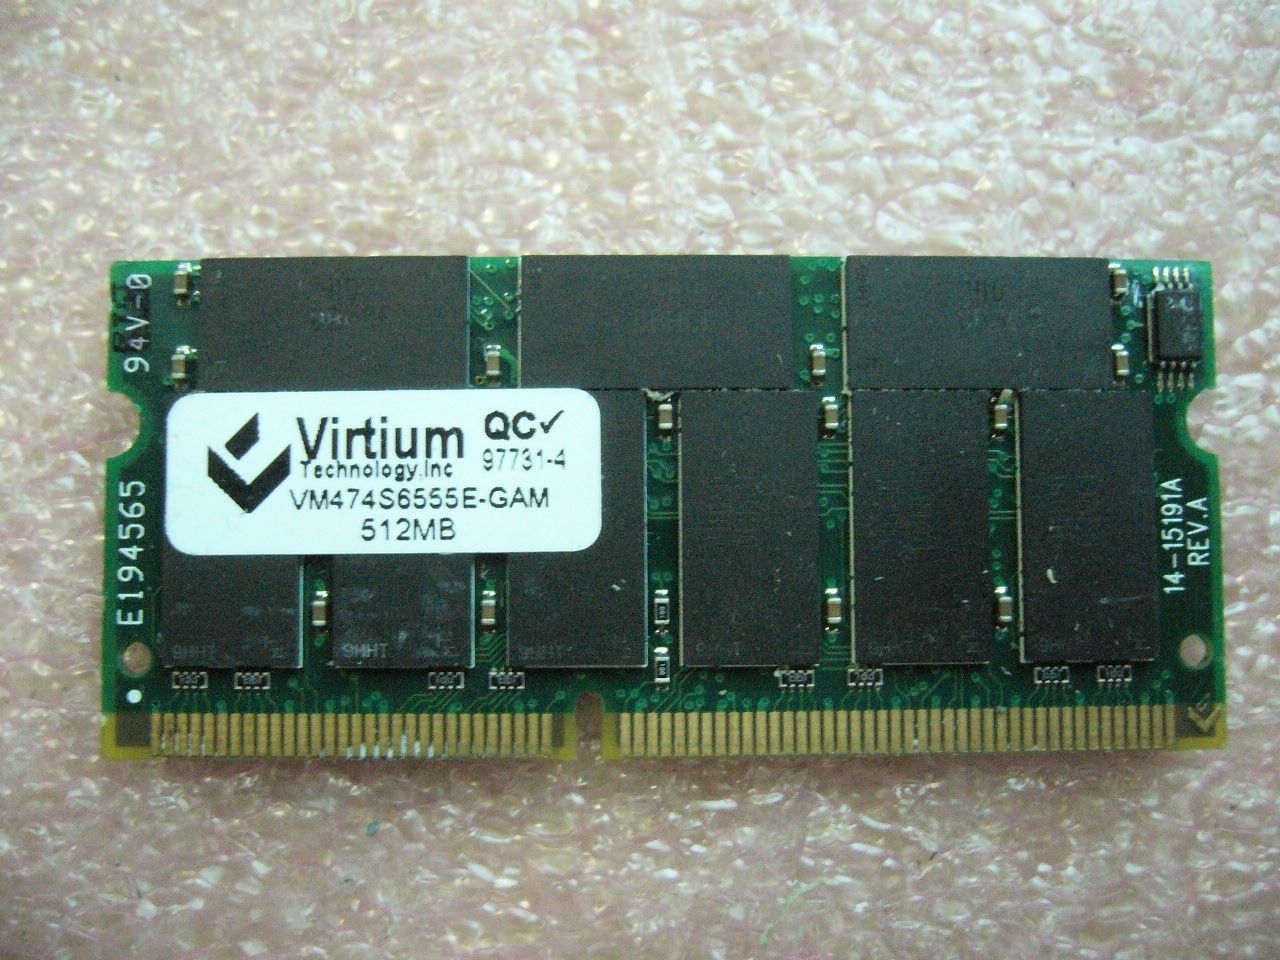 QTY 1x 512MB SDRAM PC133Mhz ECC laptop memory stick VM474S6555E-GAM